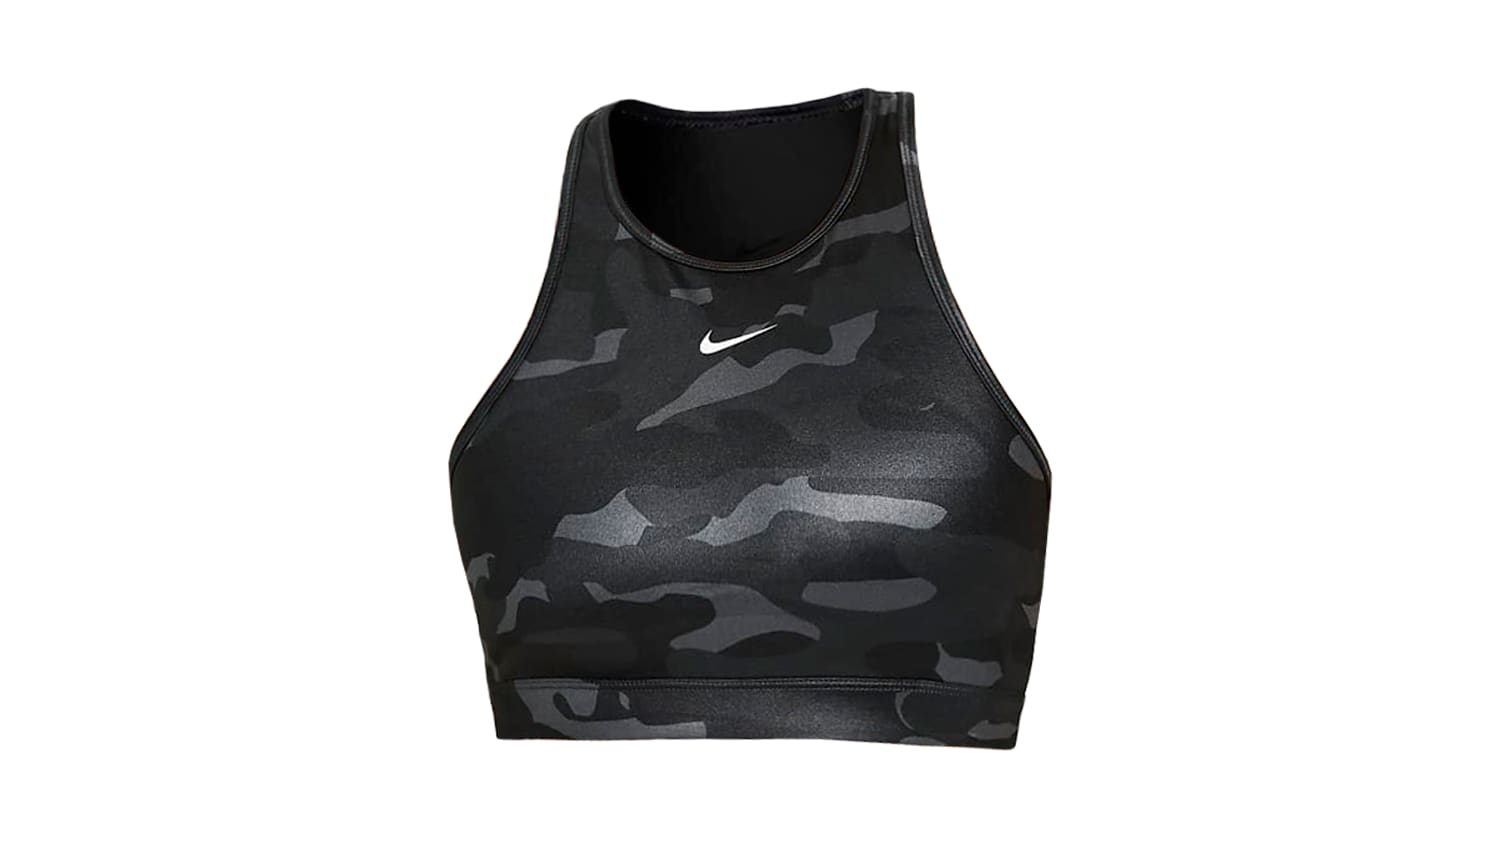 Nike - Dri-FIT High Neck Sports Bra in Black/White/White at Nordstrom